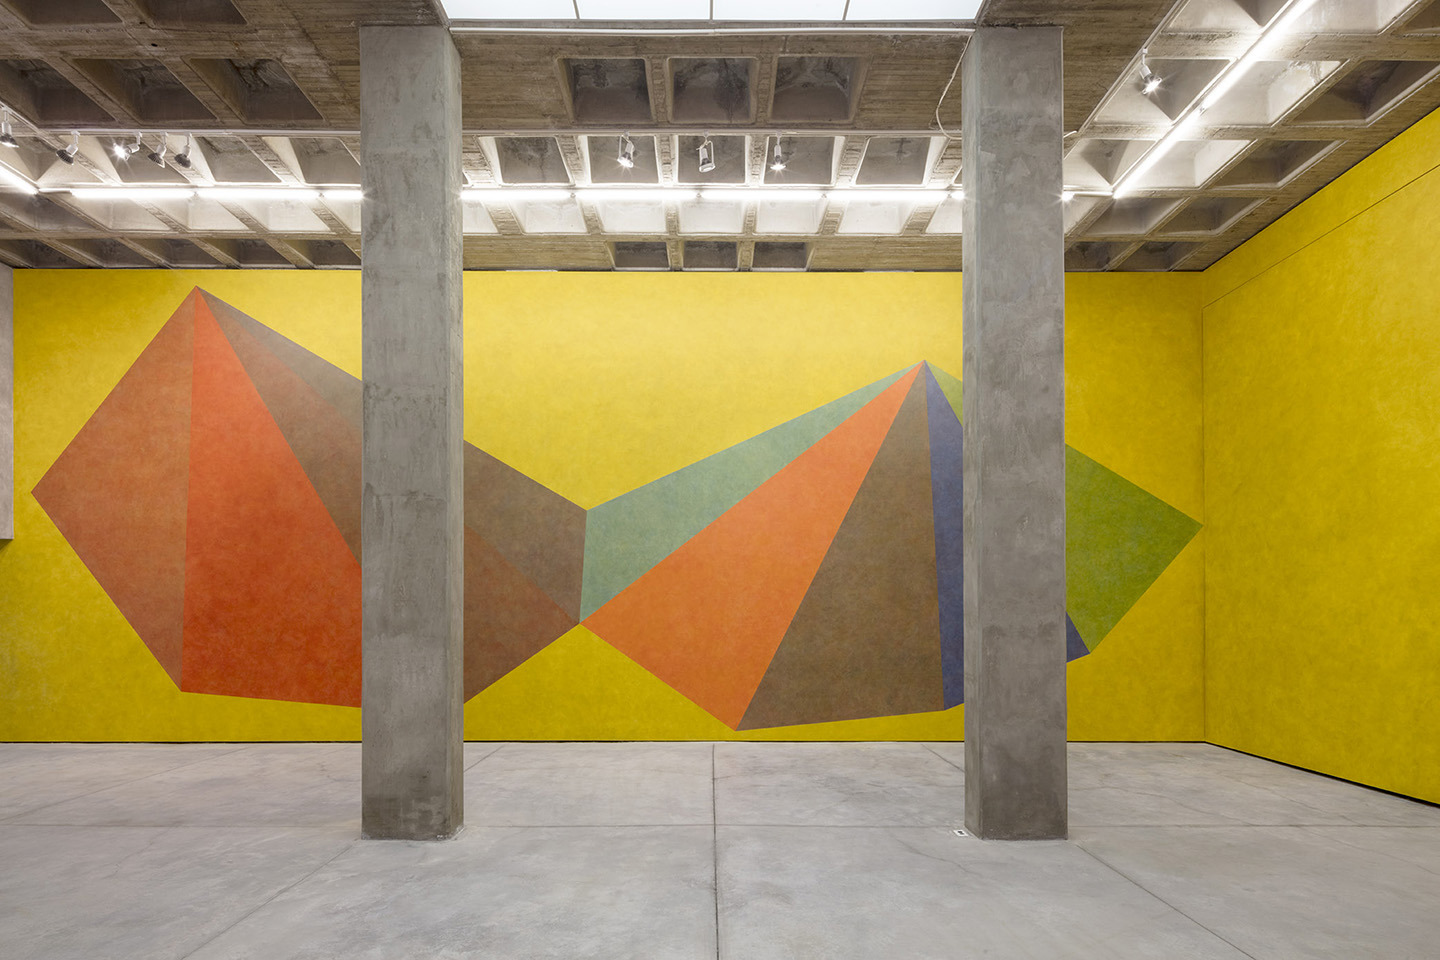 Sol LeWitt “Instructions for a Pyramid” at Galería OMR, Mexico City ...